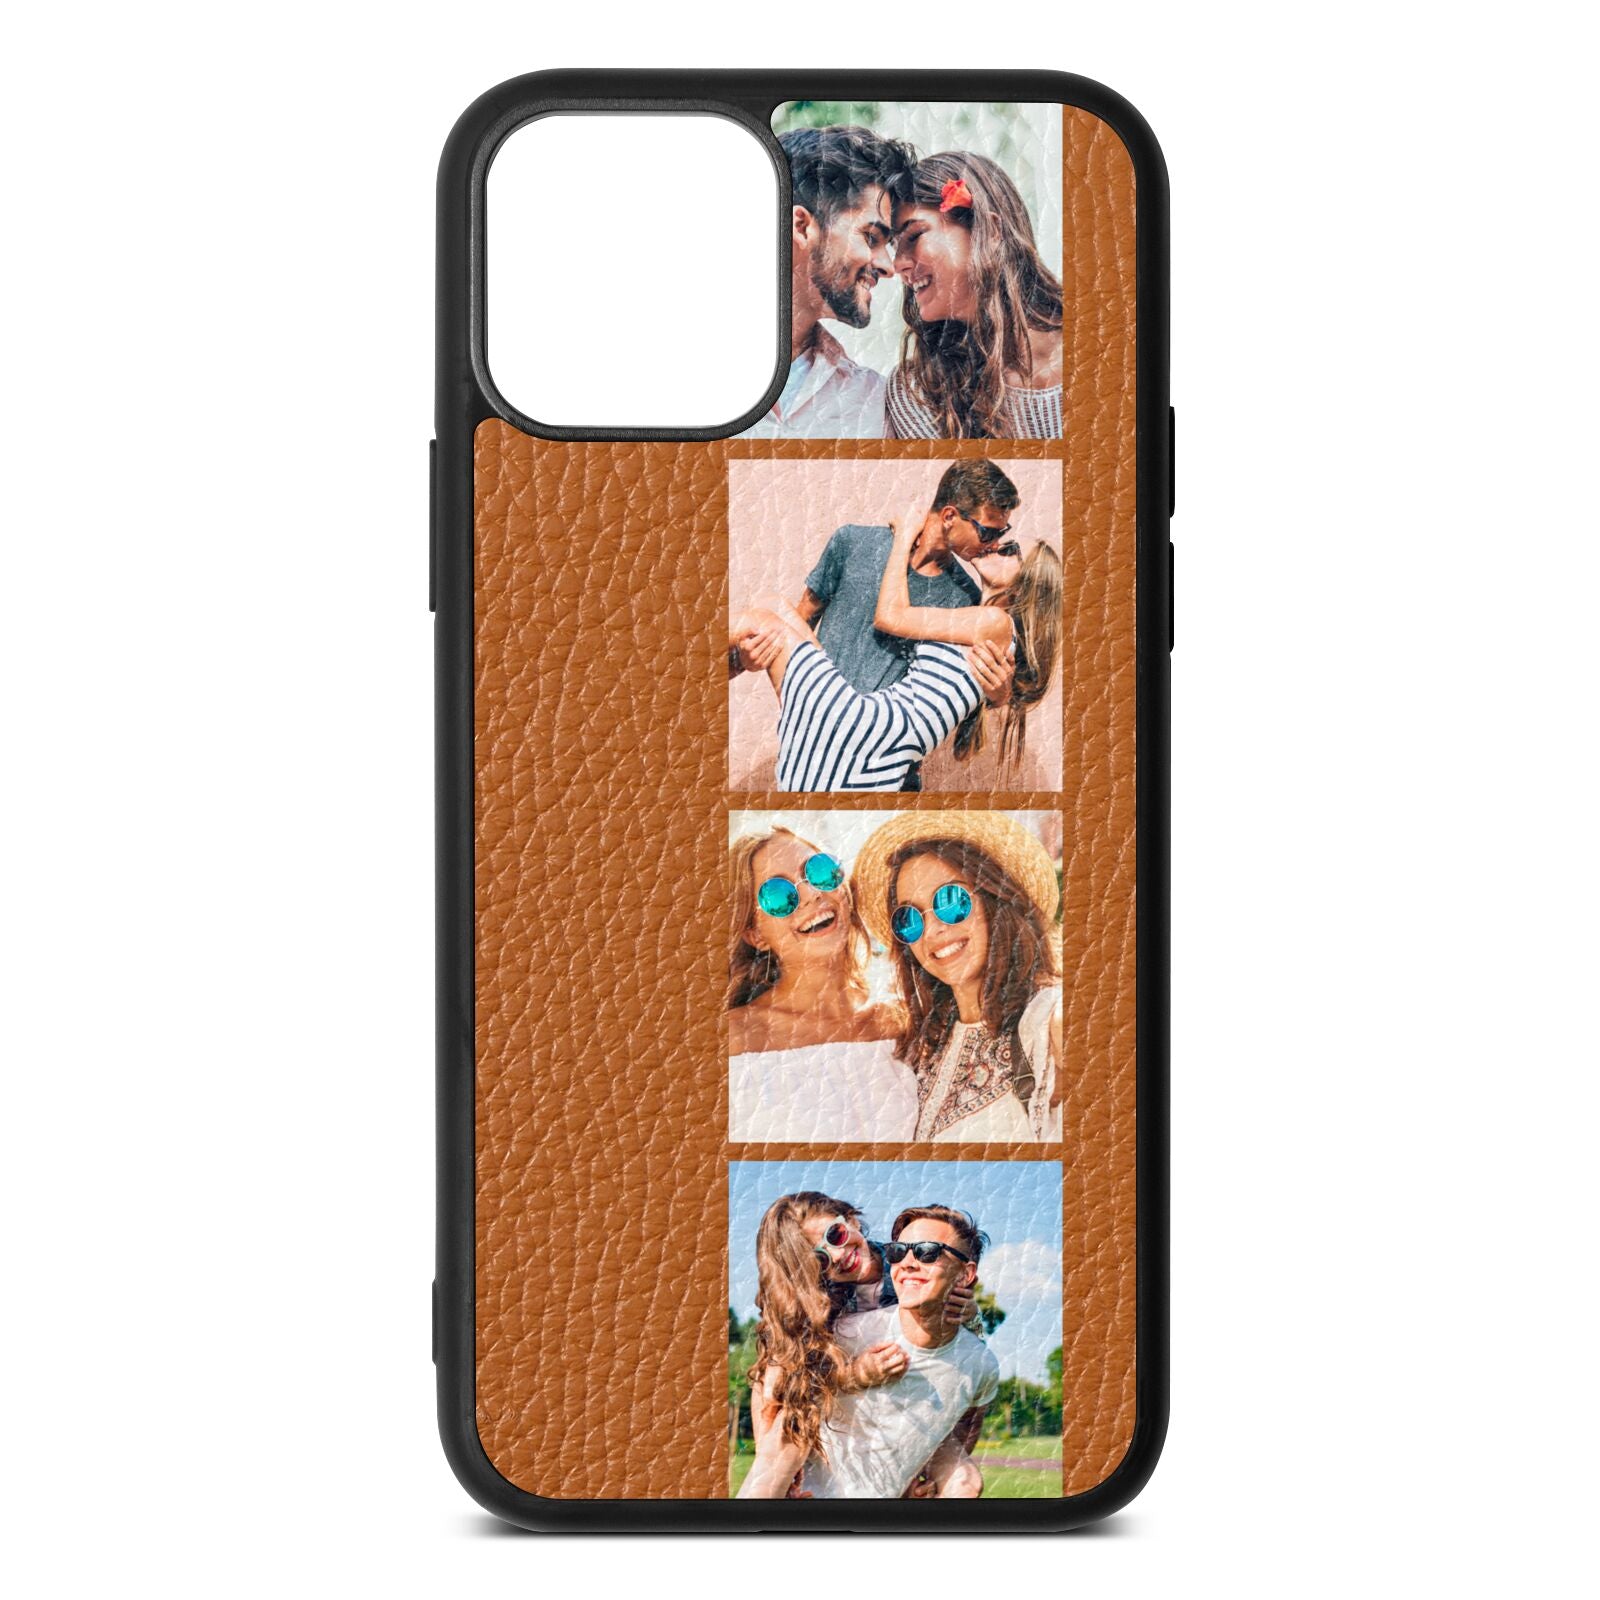 Photo Strip Montage Upload Tan Pebble Leather iPhone 11 Case